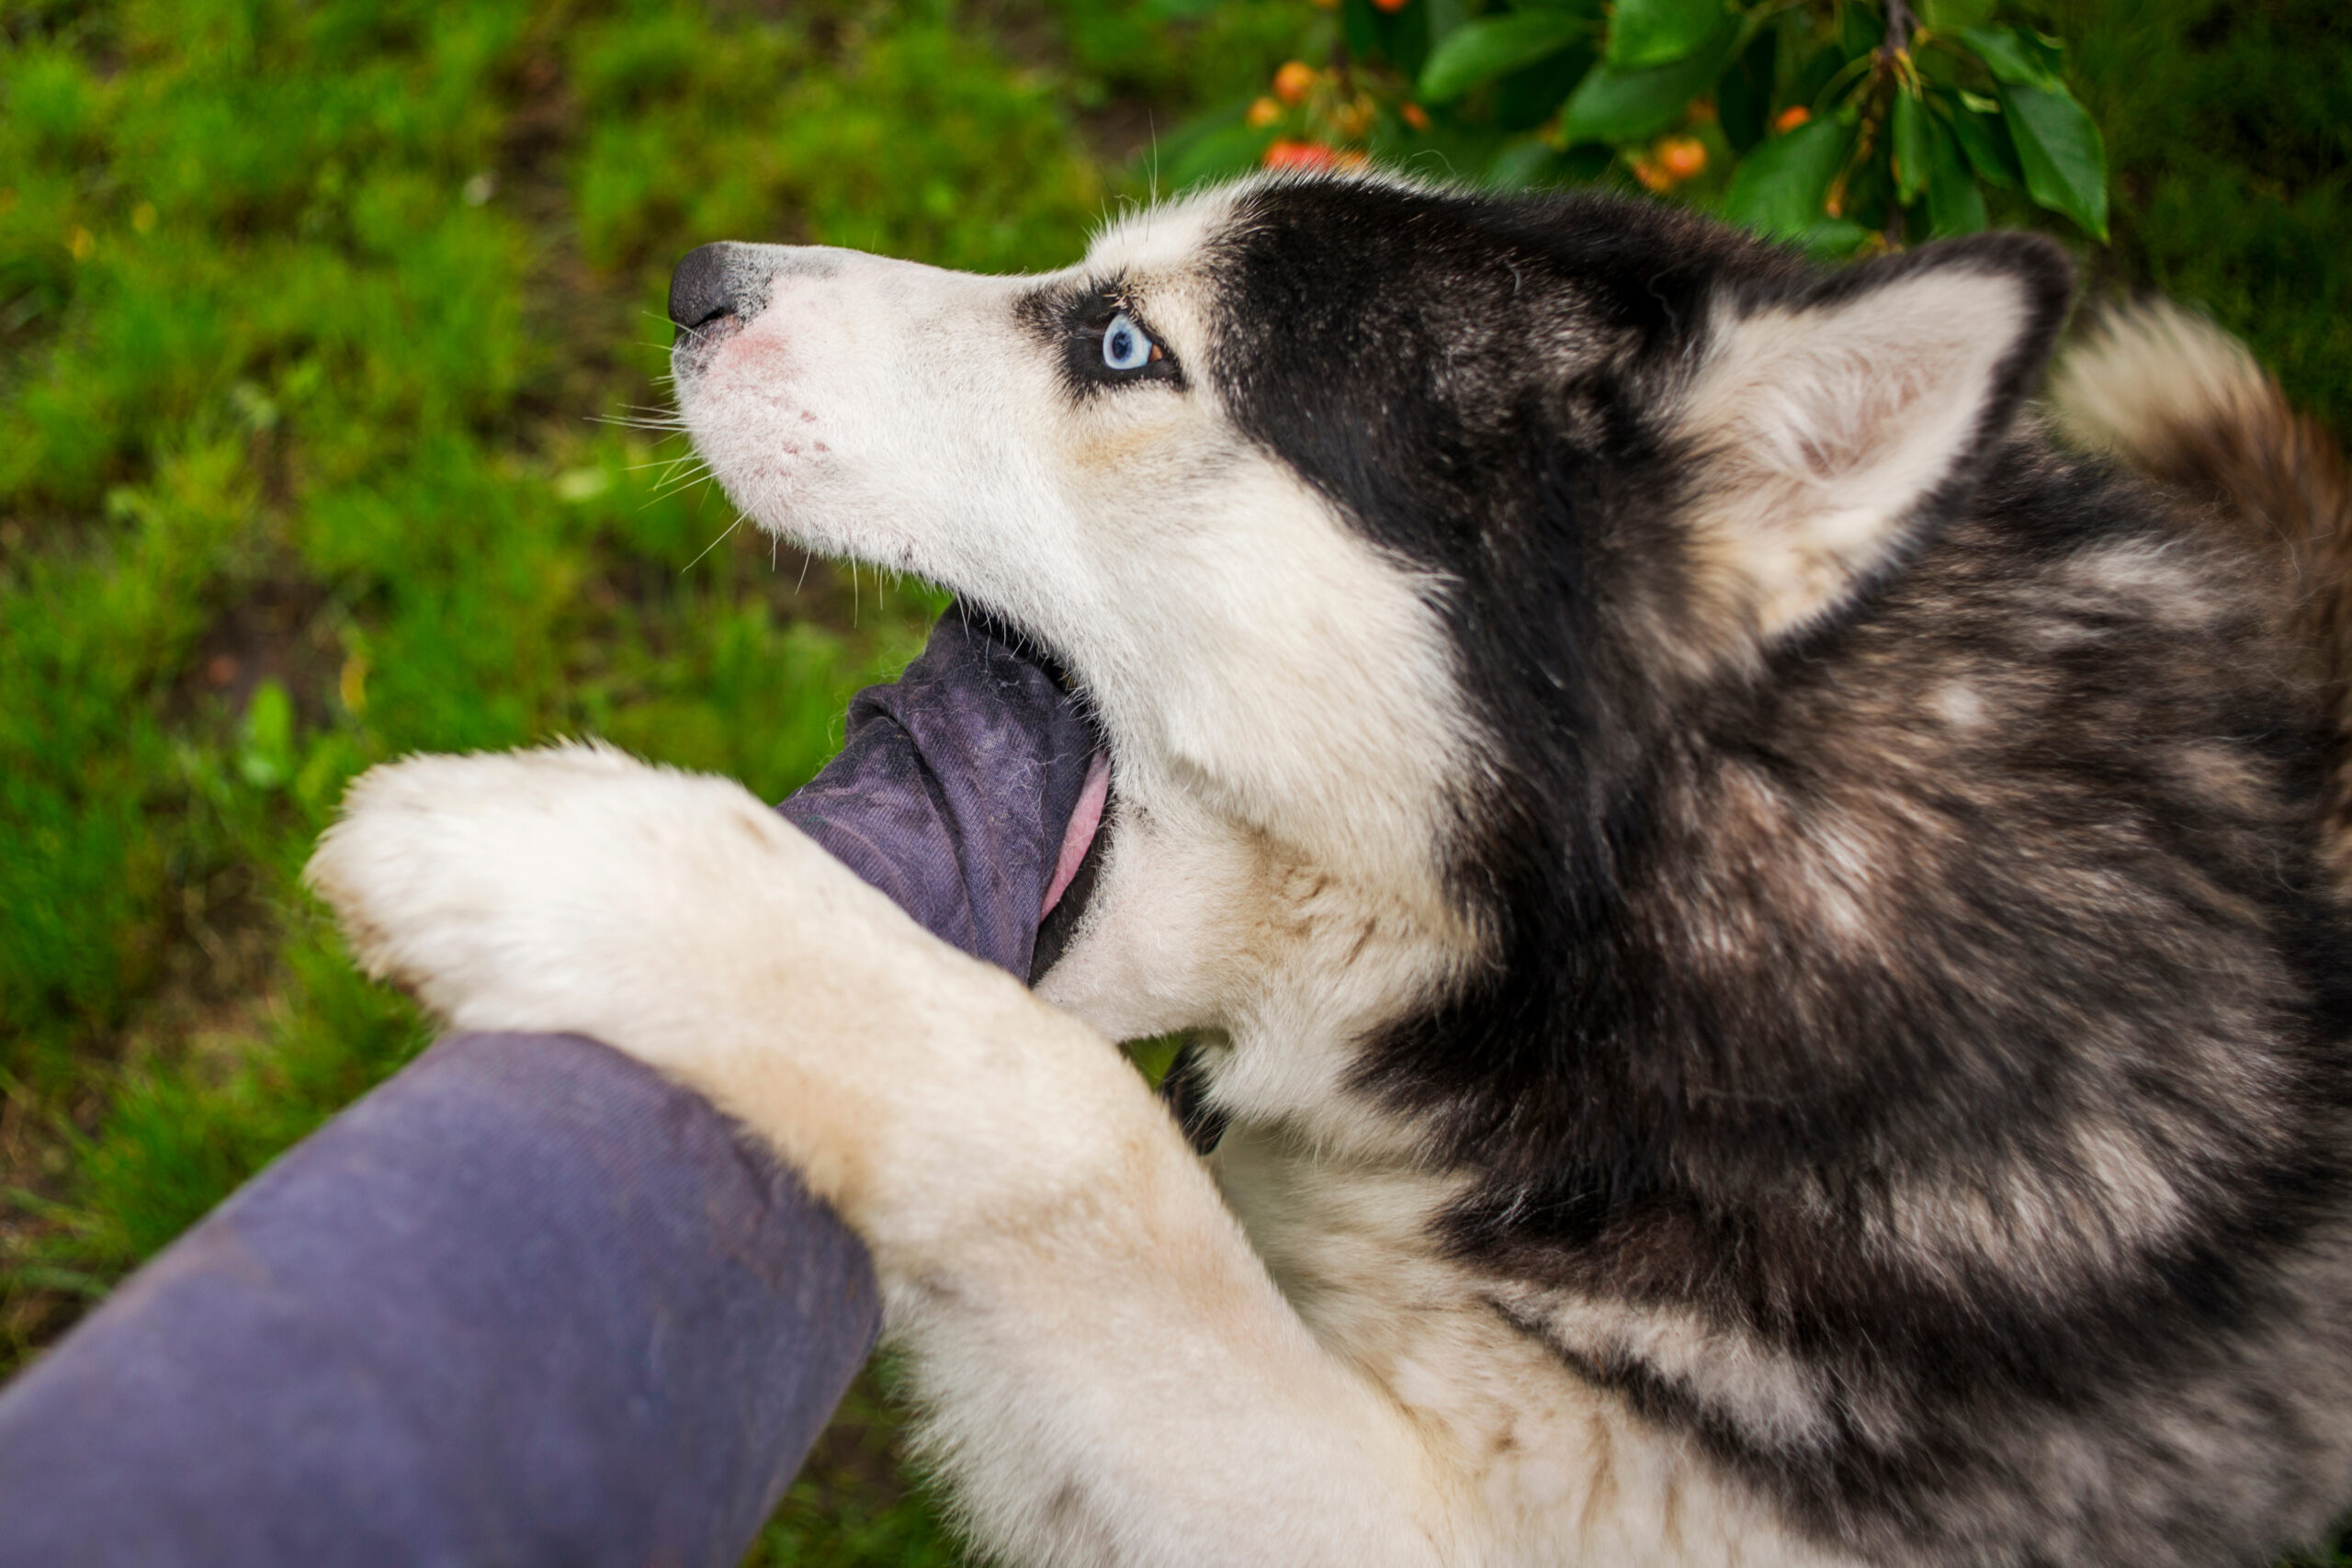 Husky dog biting a person’s arm